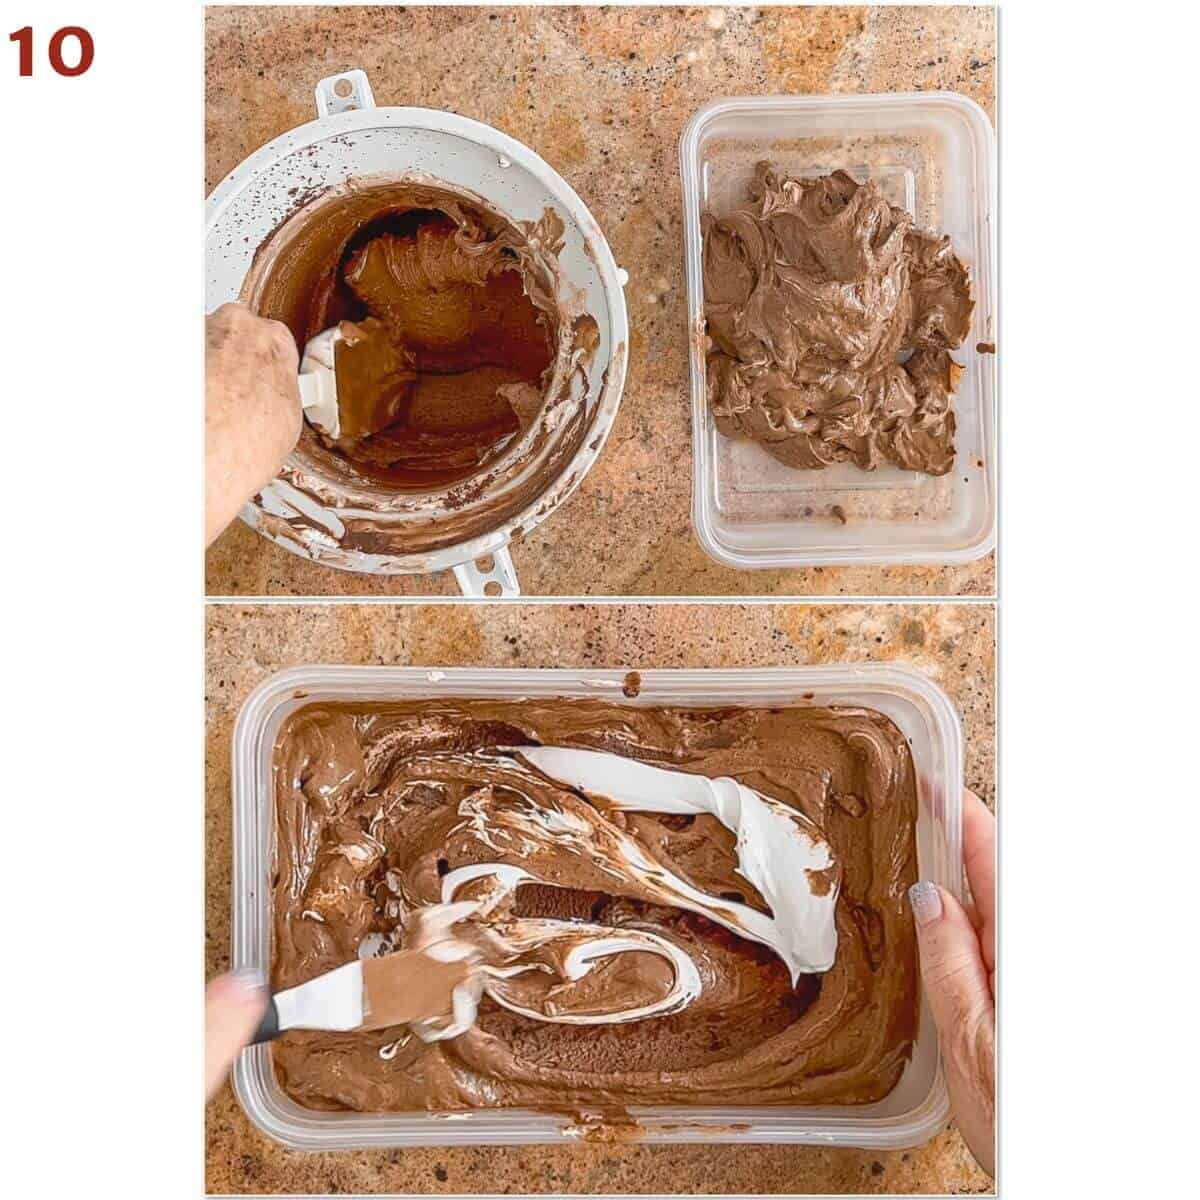 Collage of transferring ice cream to tub & adding more marshmallow creme.